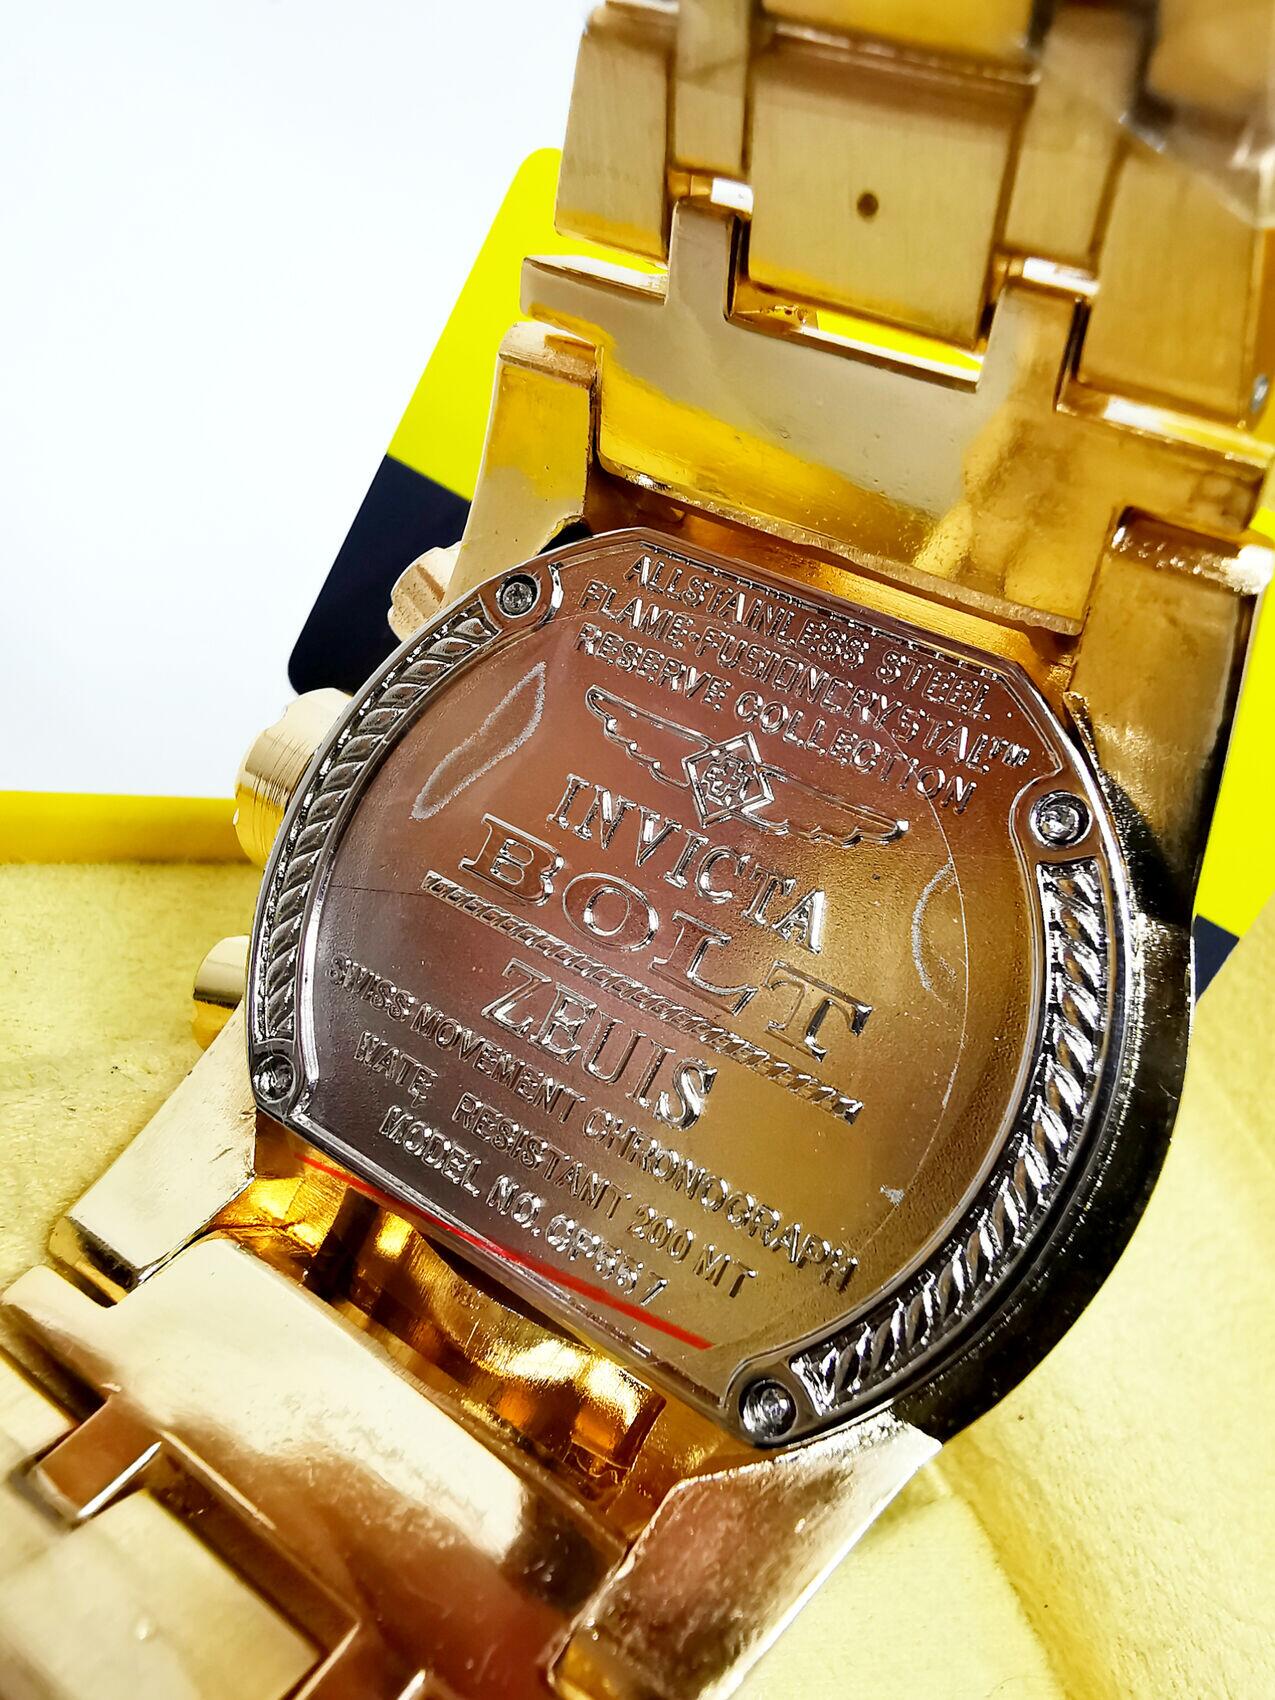 Relógio Masculino Invicta Zeus Magnum Dourado fundo Preto Pulseira